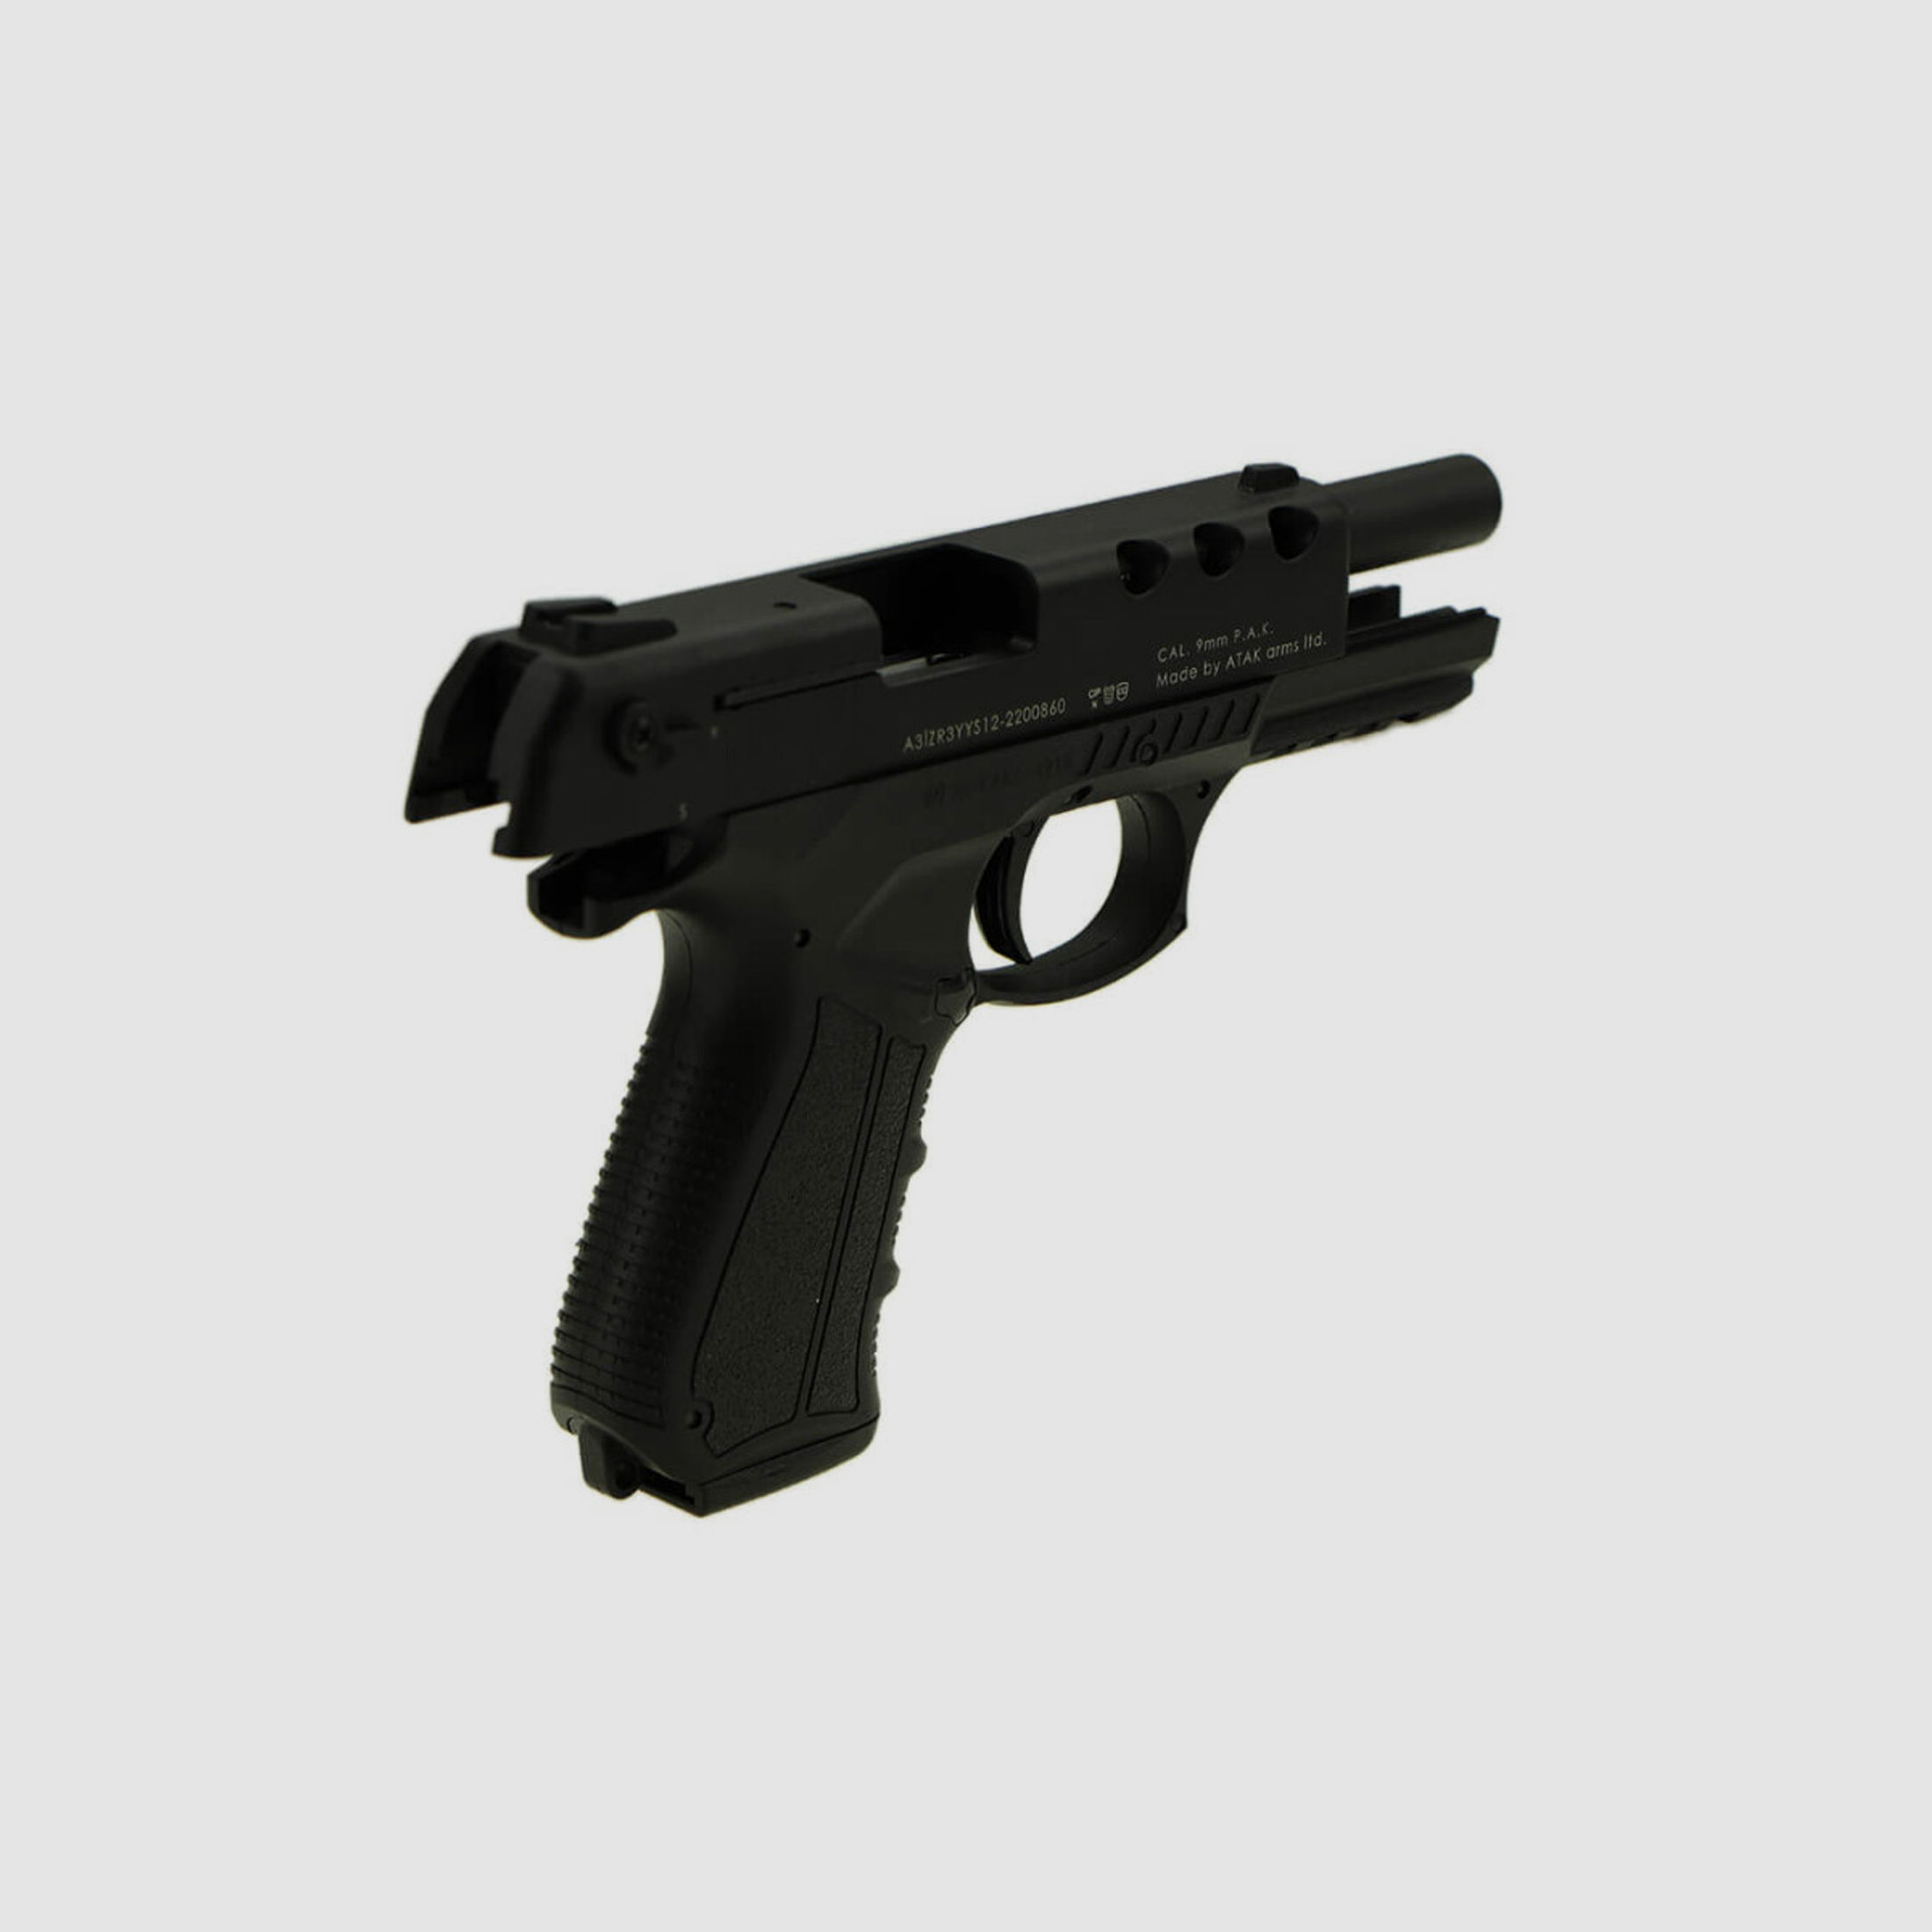 Zoraki Schreckschusspistole 4918, cal. 9mm PAK